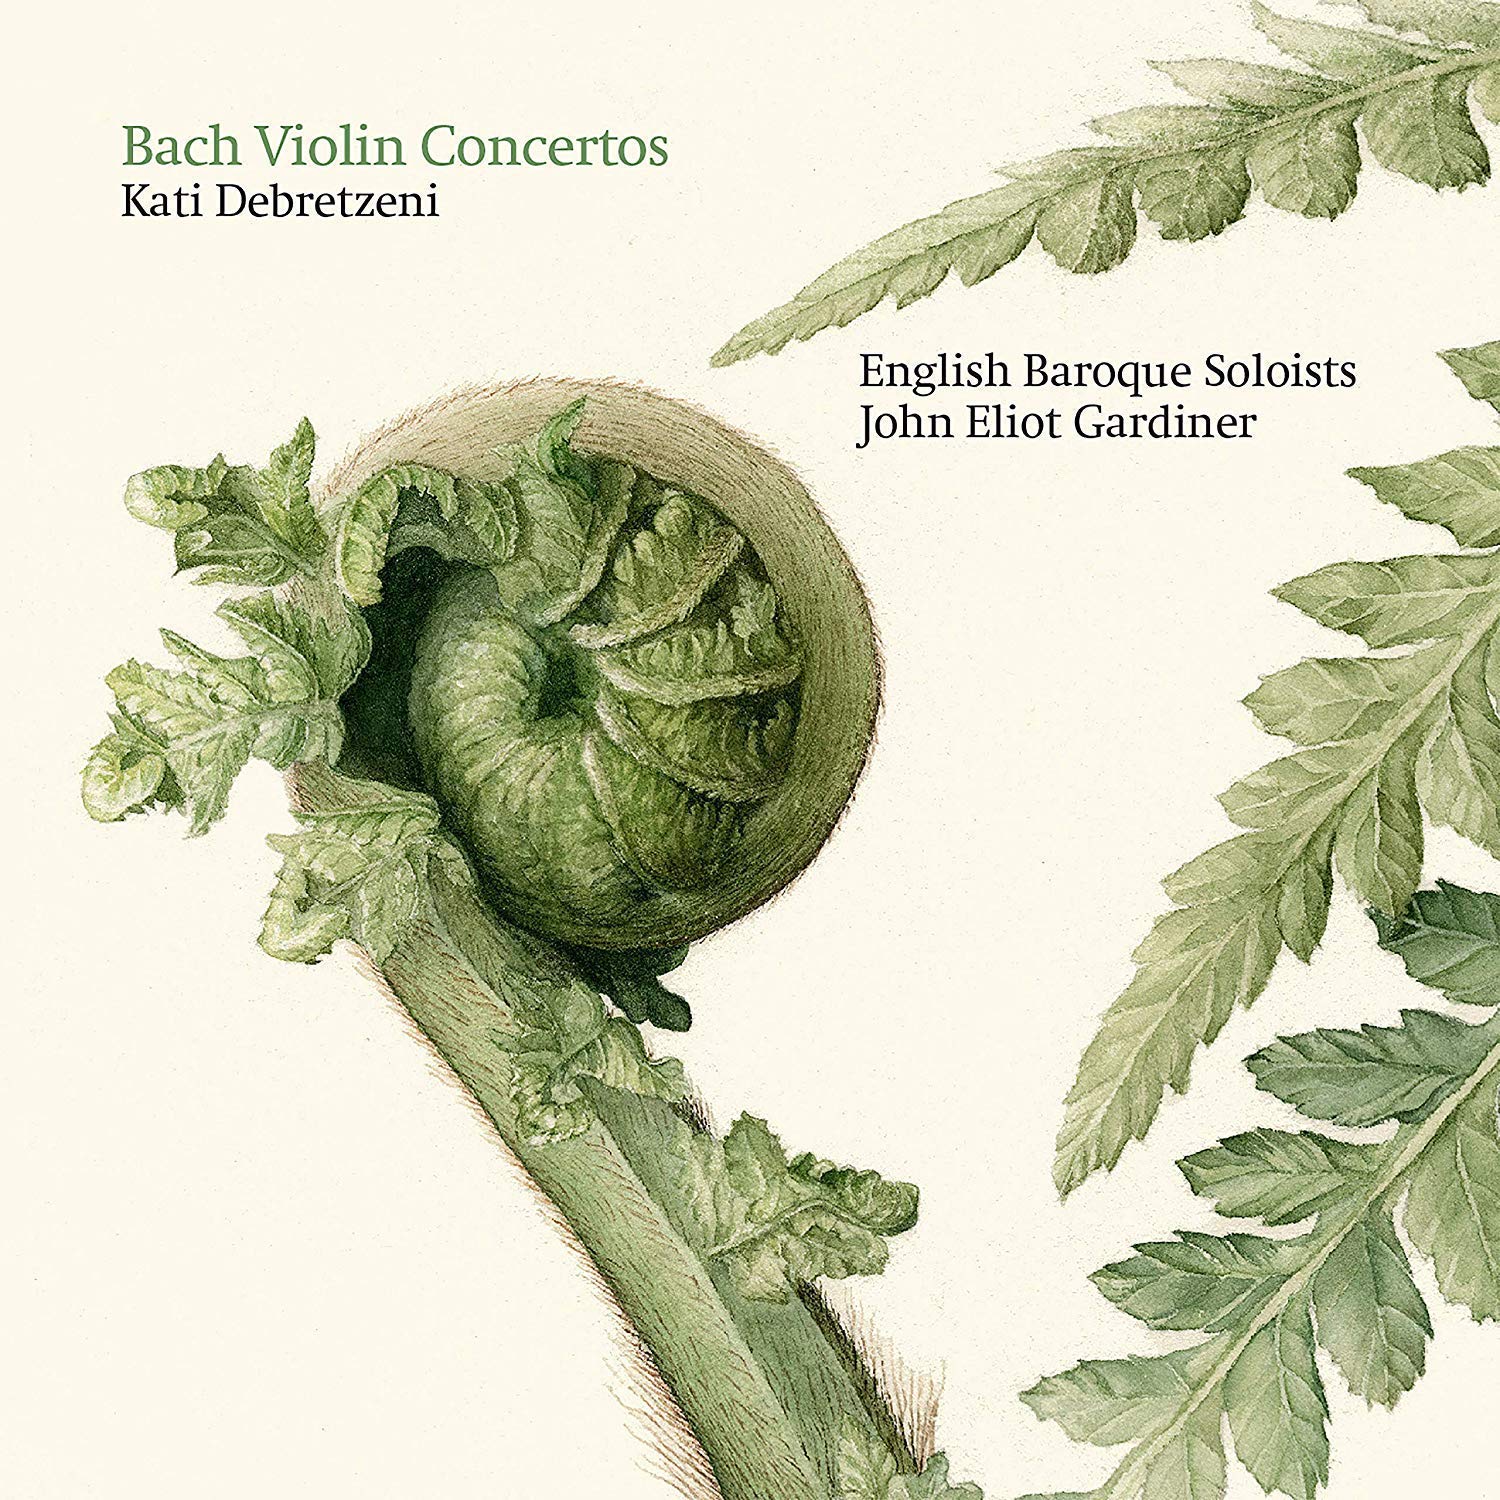 CD cover of Bach violin concertos